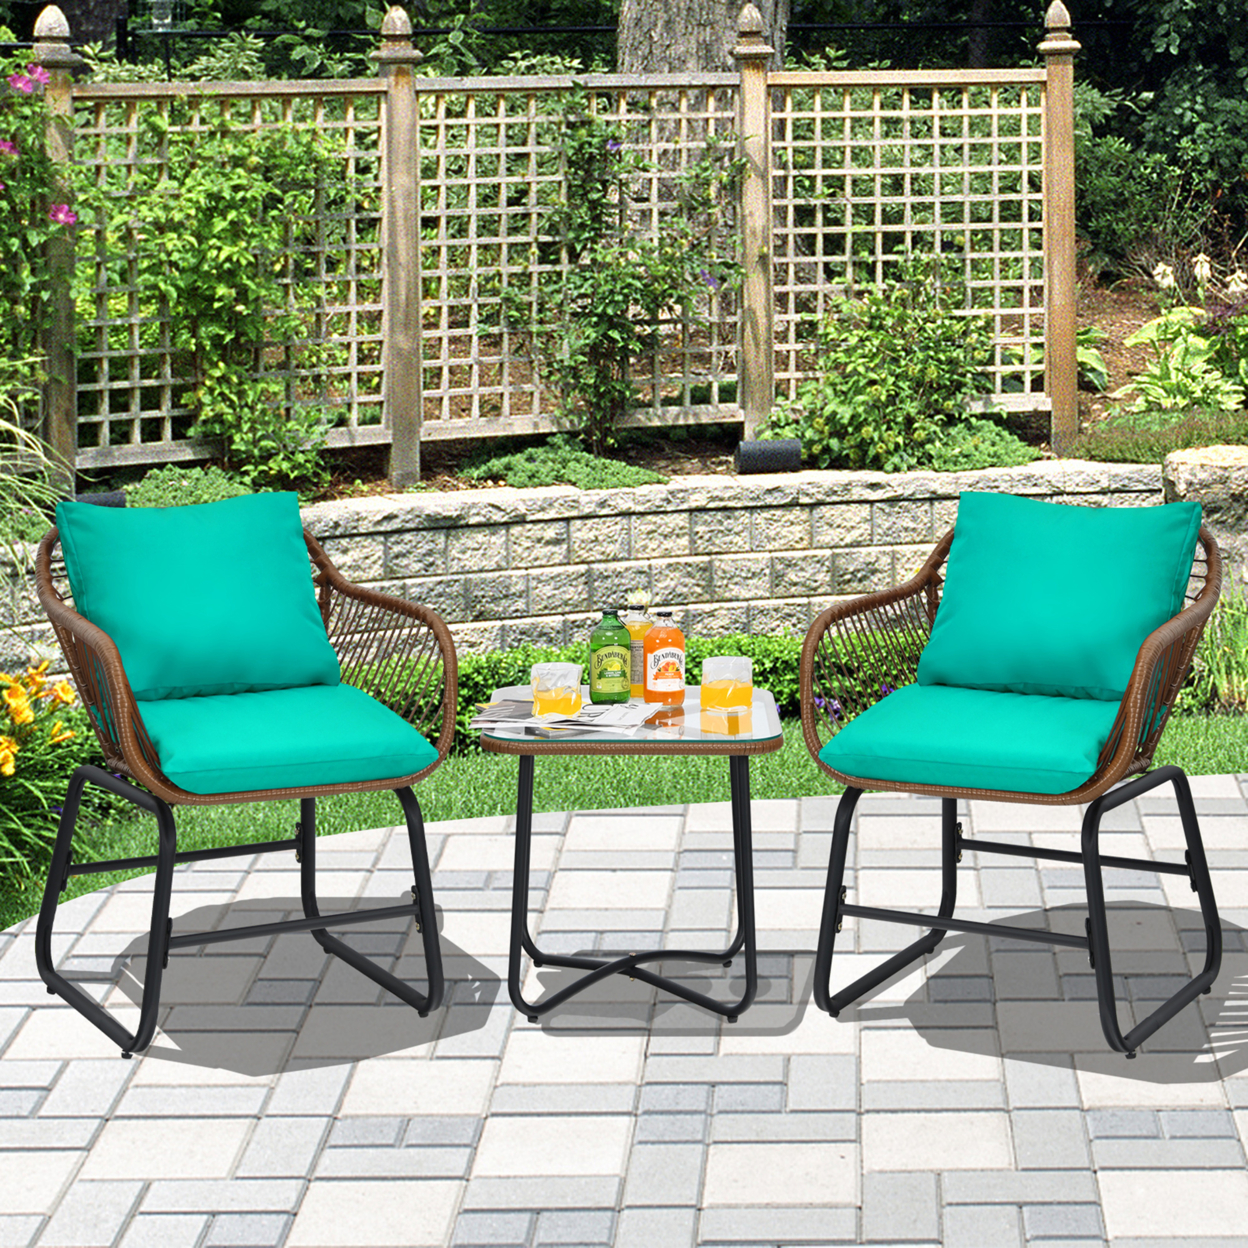 3PCS Outdoor Bistro Set Patio Conversation Furniture Set W/ Turquoise Cushions